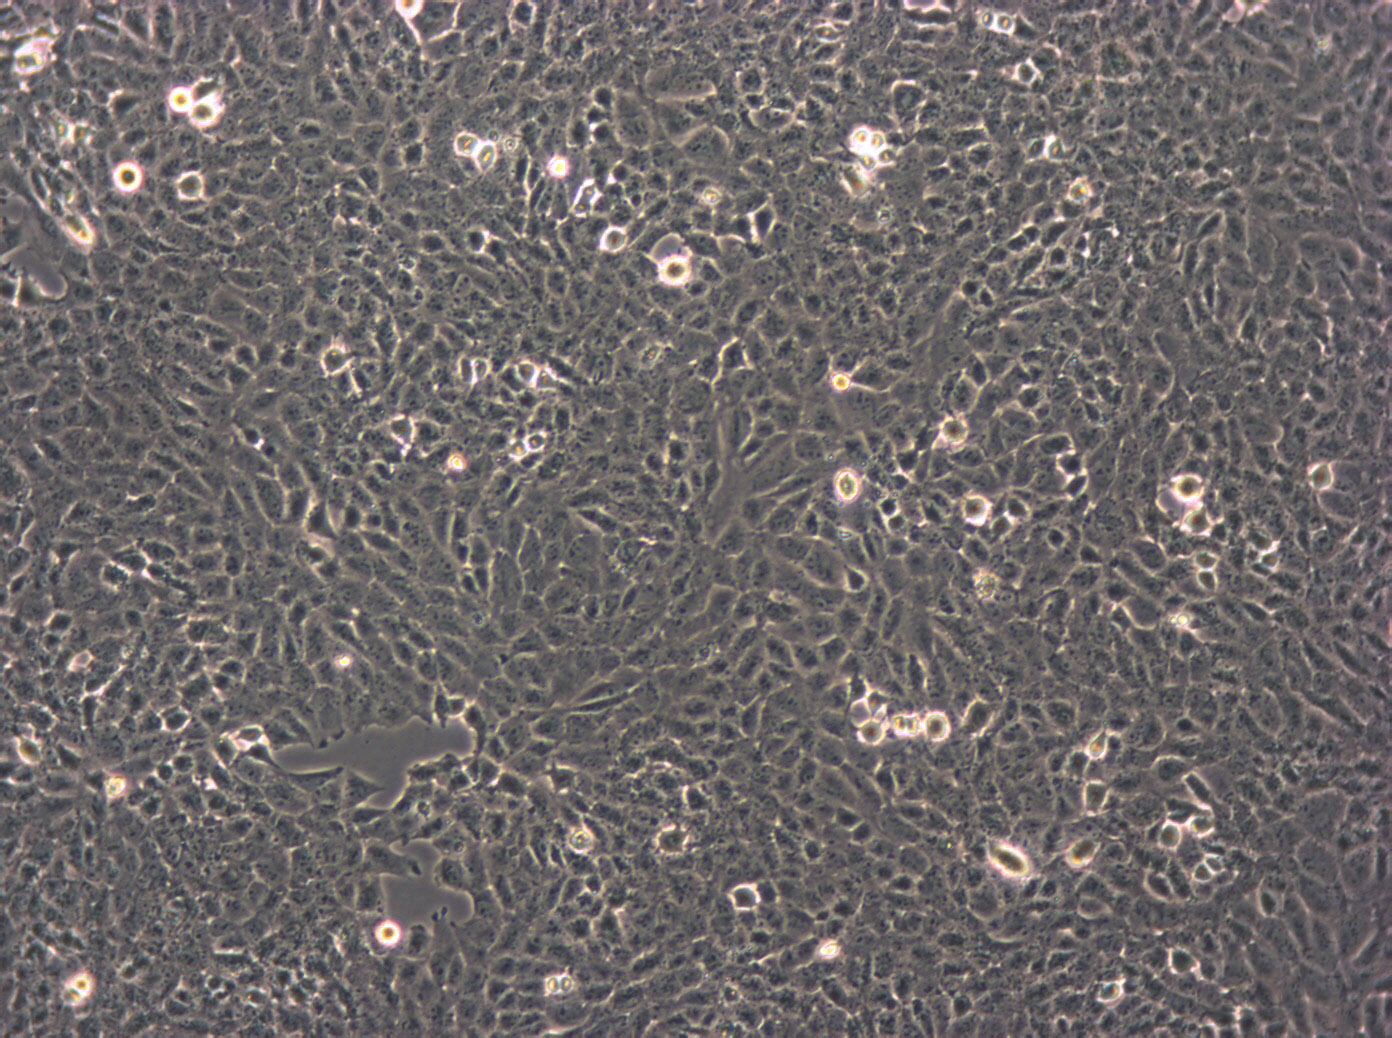 HBL-1 [Human diffuse large B-cell lymphoma] Cells(赠送Str鉴定报告)|人弥漫大B淋巴瘤细胞